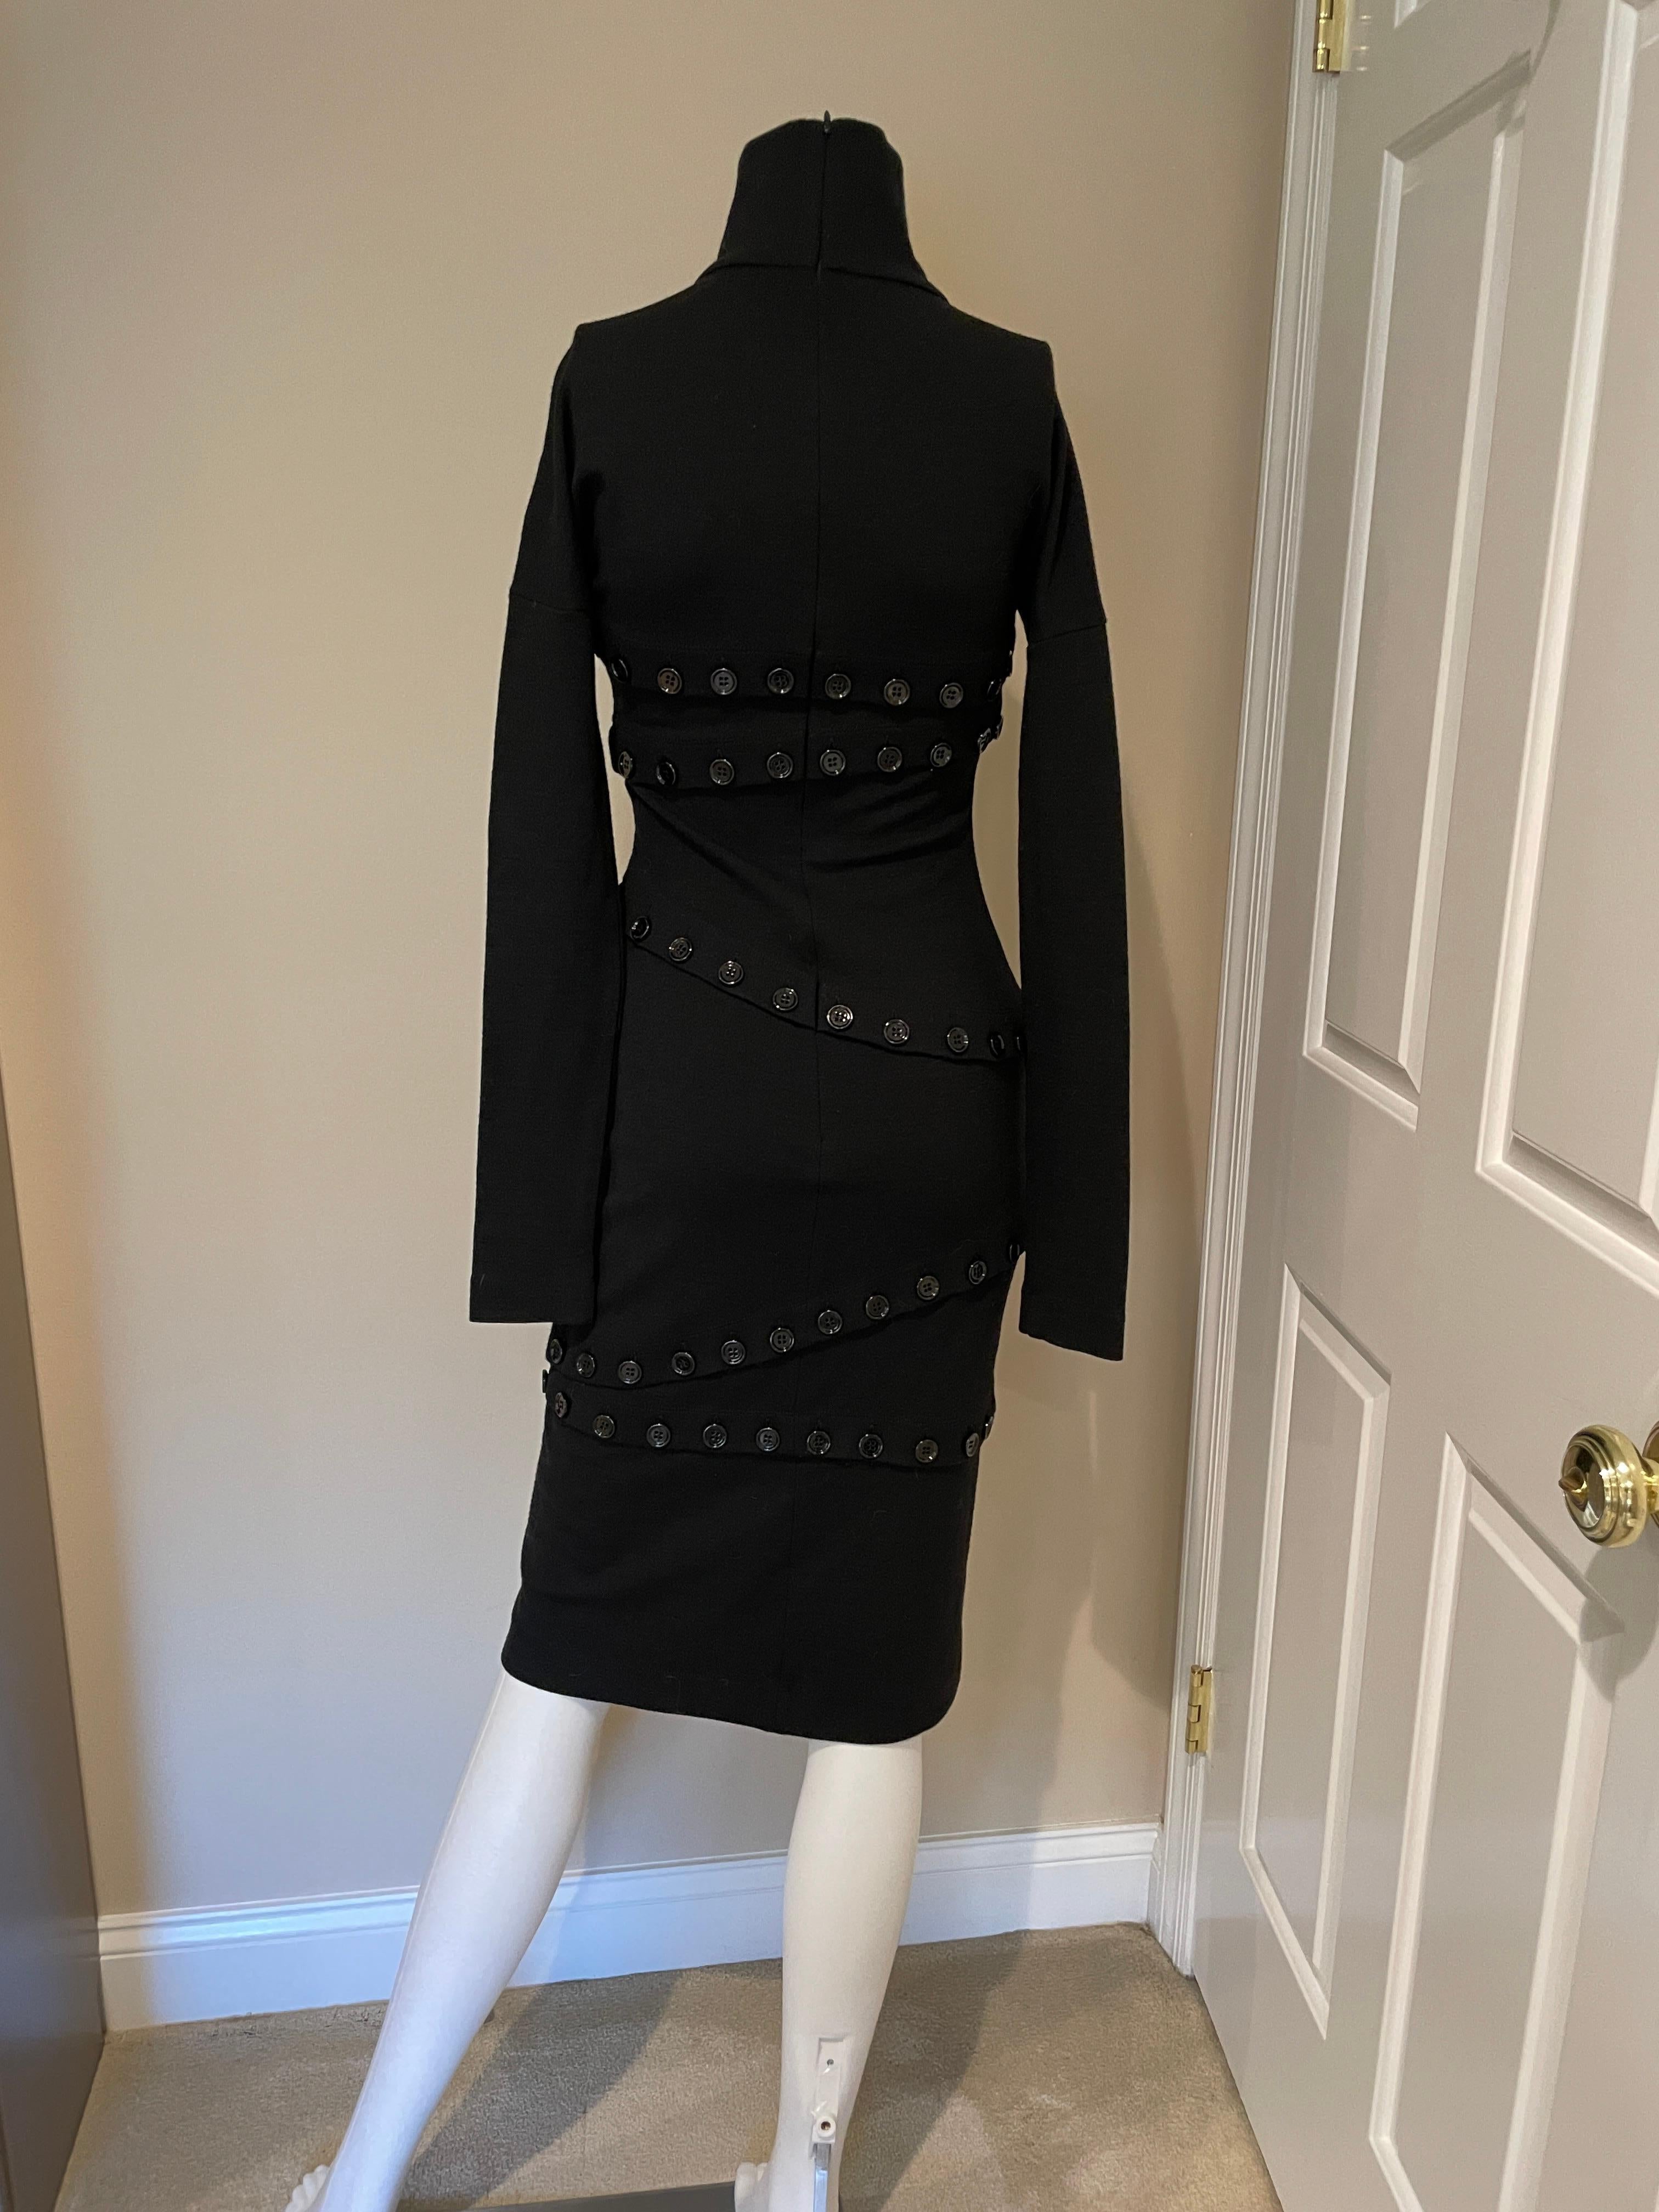 Women's DOLCE & GABBANA 2003 vintage runway black button dress